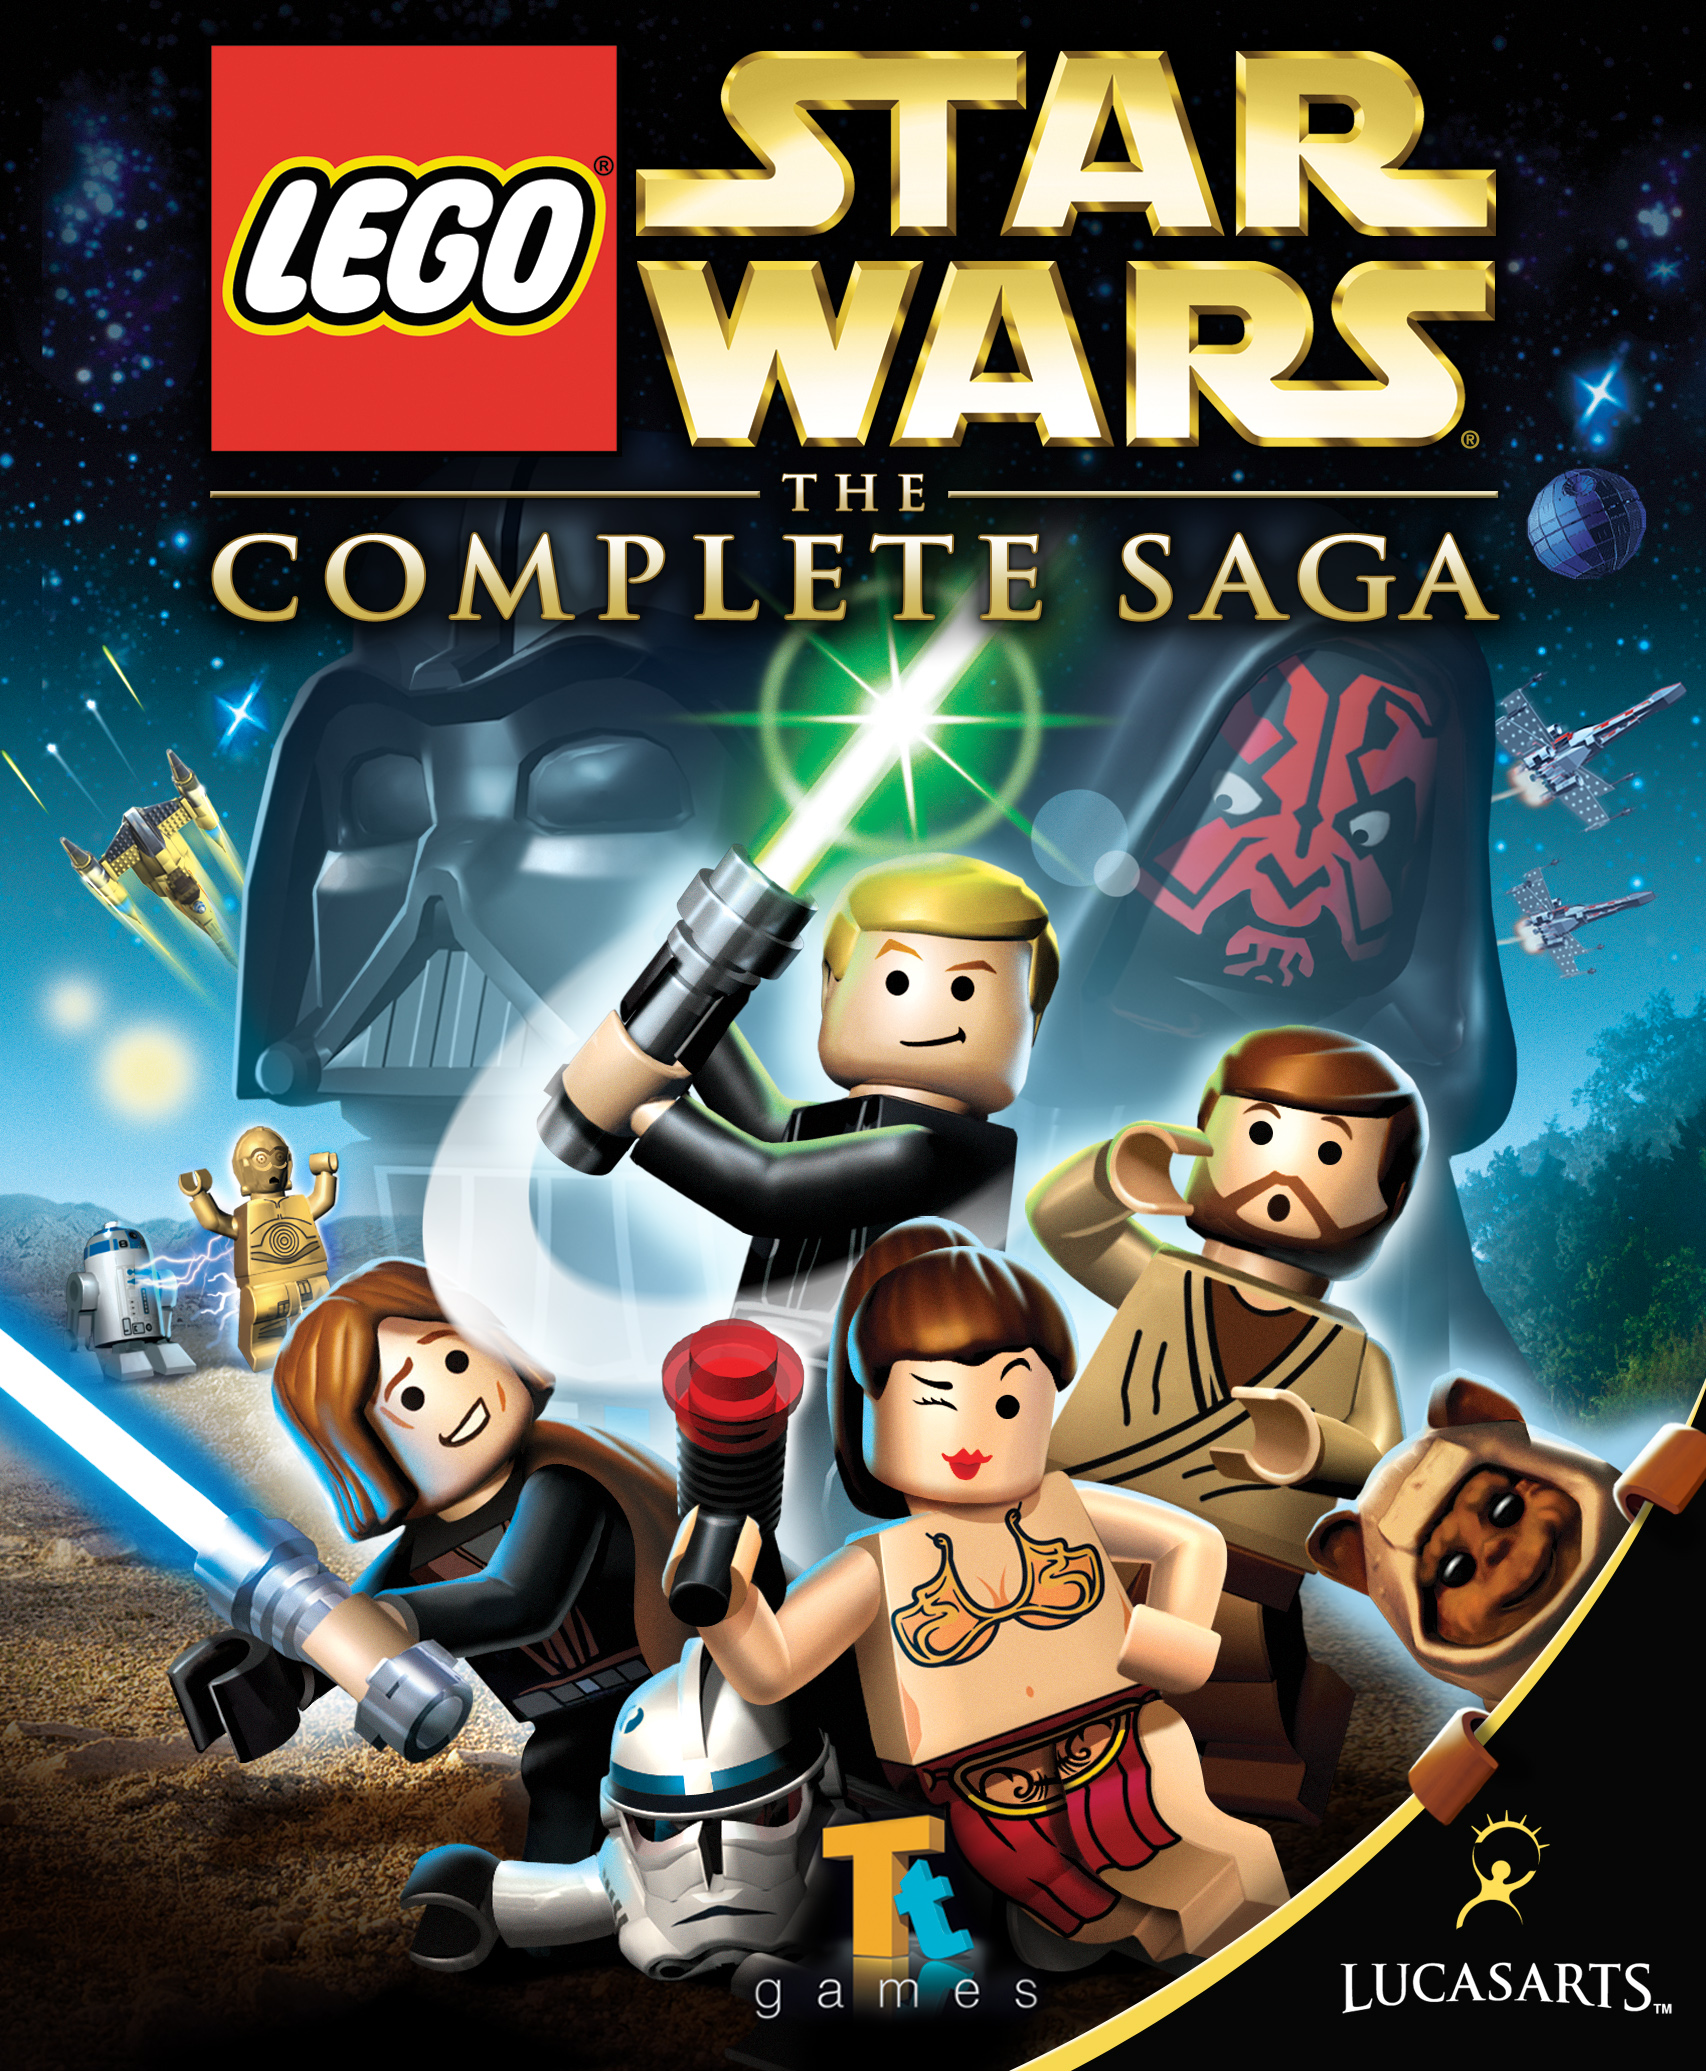 LEGO® Star Wars™ Battles: PVP - Apps on Google Play